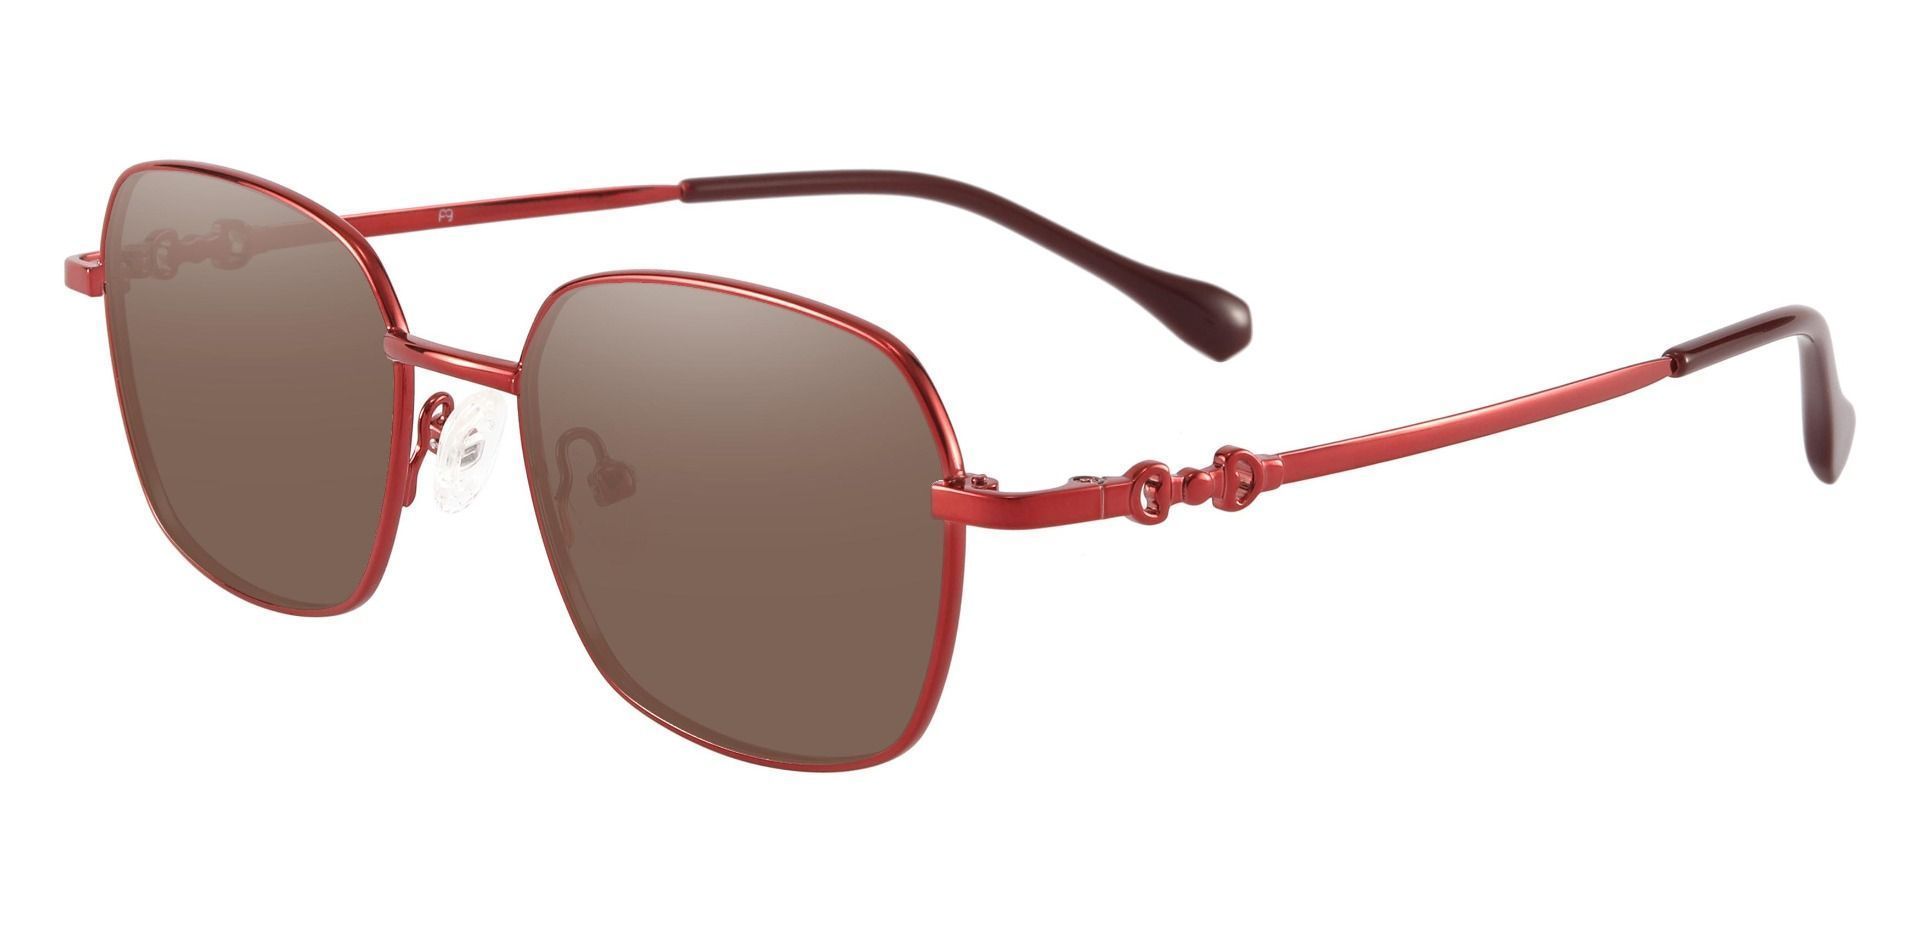 Averill Geometric Prescription Sunglasses - Red Frame With Brown Lenses